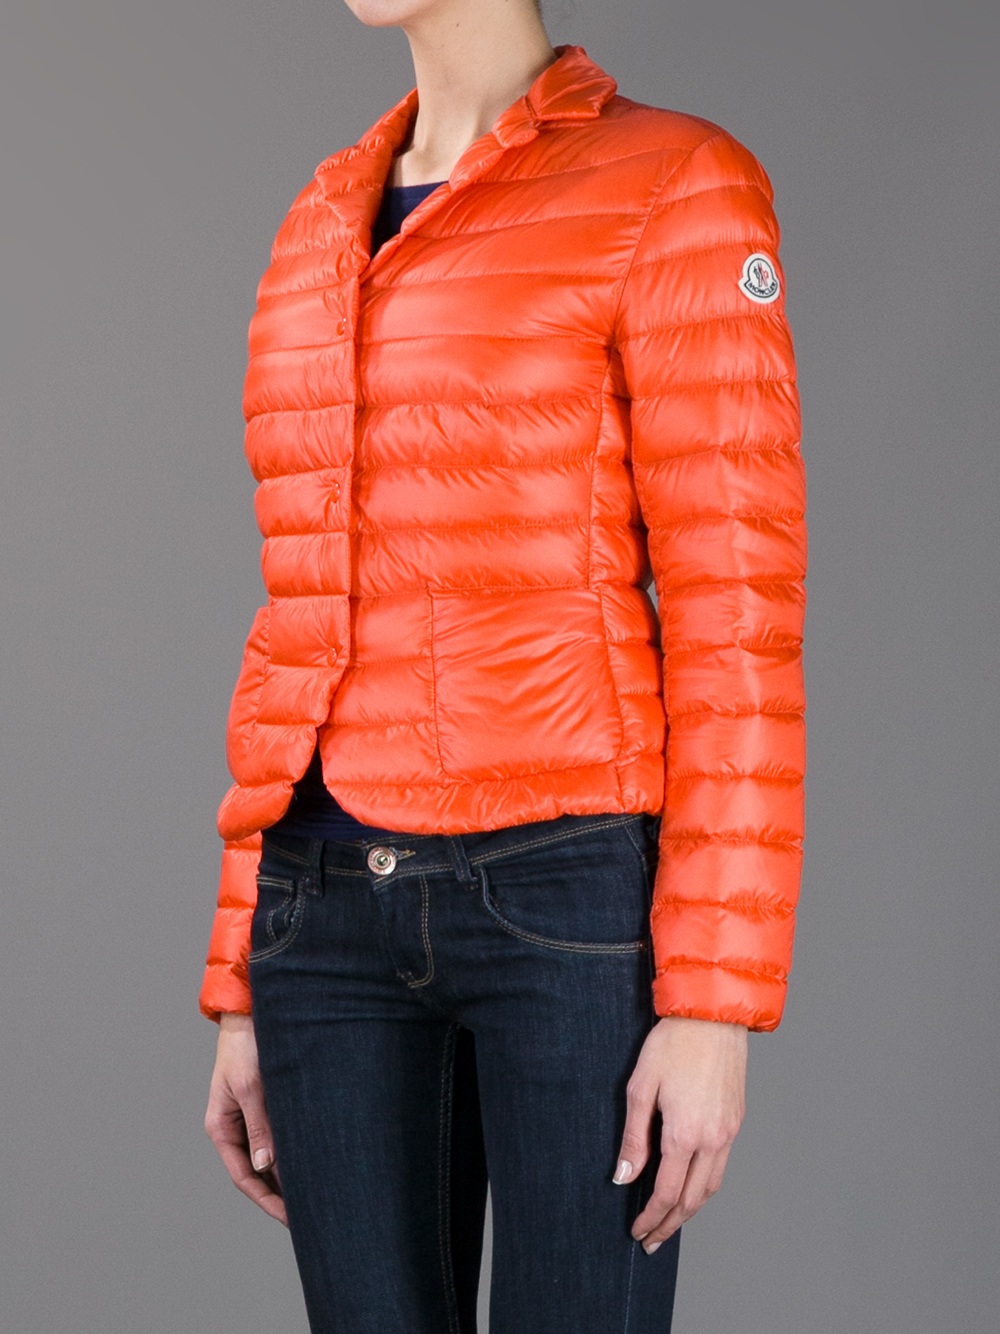 Moncler Lisette Jacket in Orange - Lyst